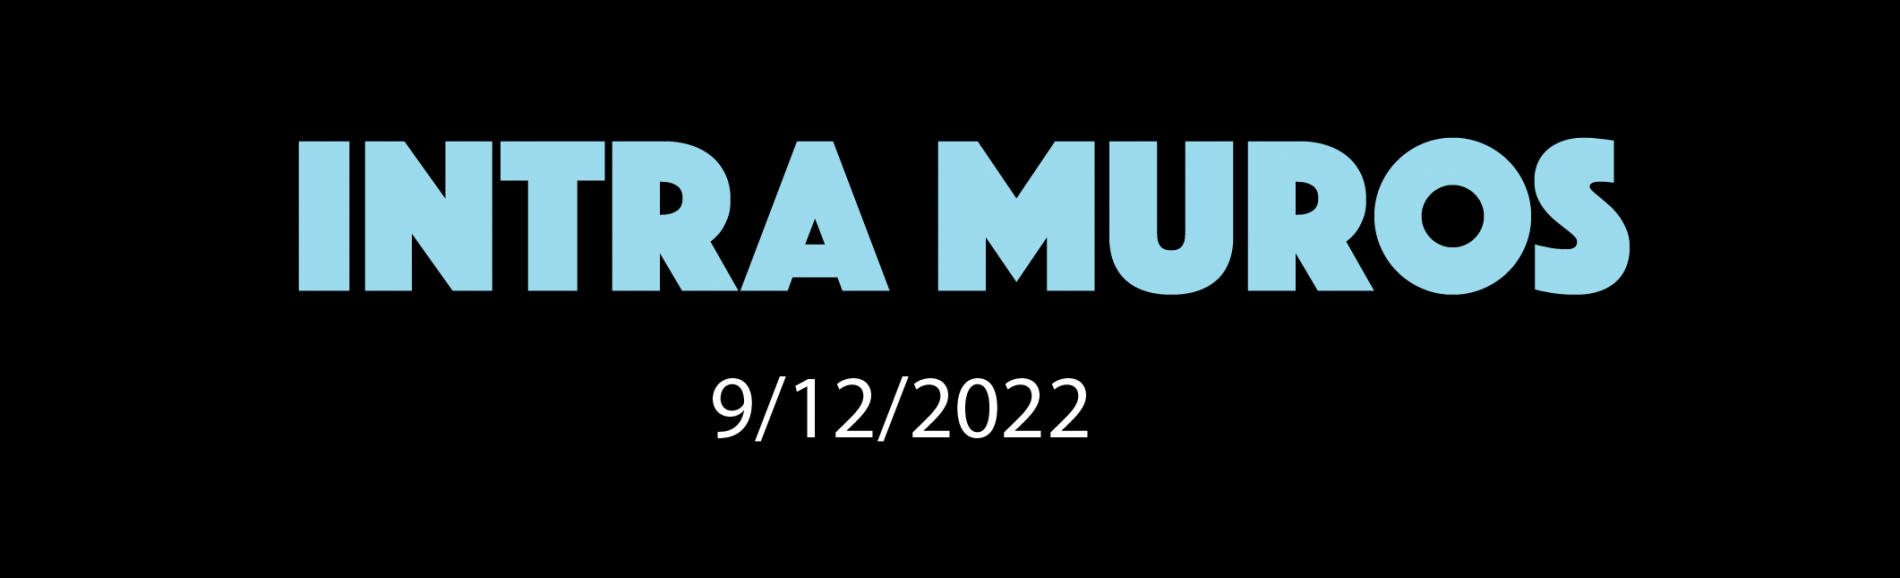 INTRA MUROS 9/12/2022